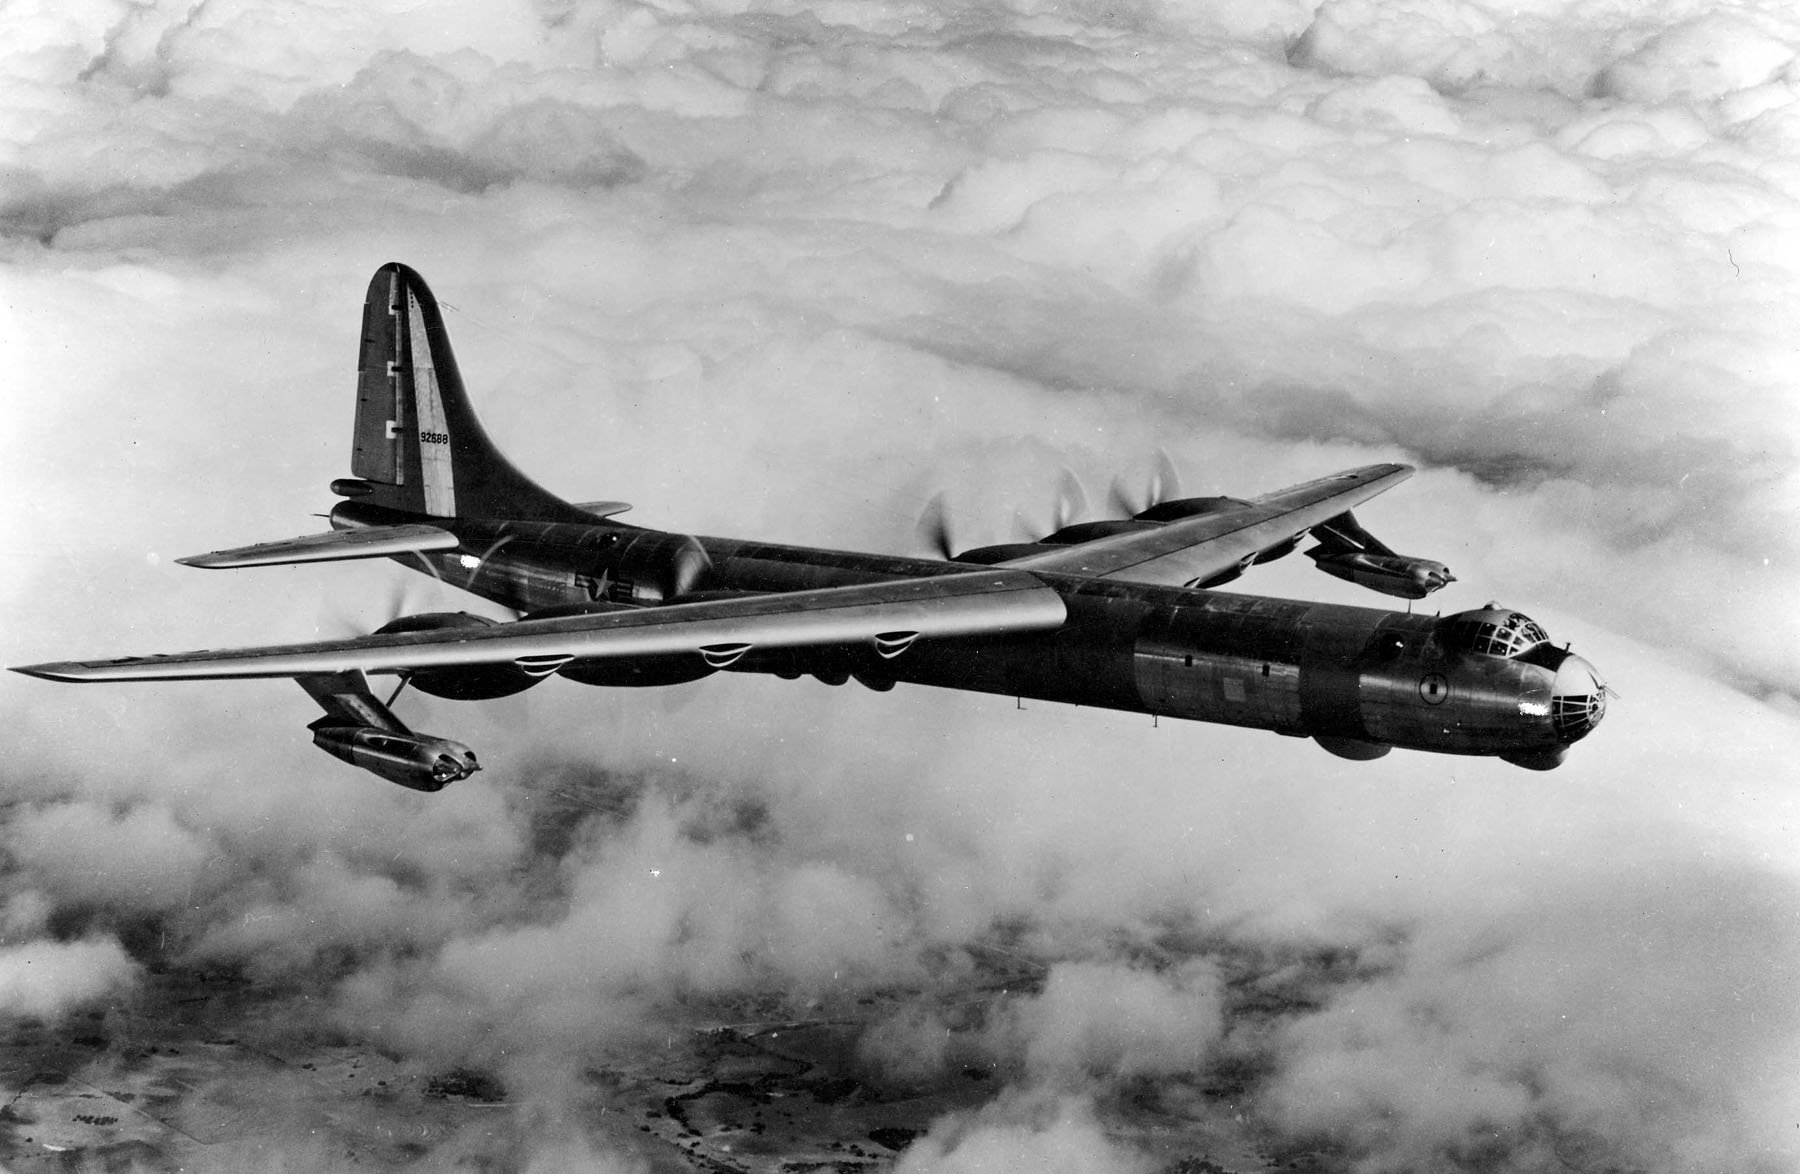 Картинка бомбардировщика. Самолёт Convair b 36. Бомбардировщику Convair b-36. B-36 Peacemaker. Convair b-36 Peacemaker.